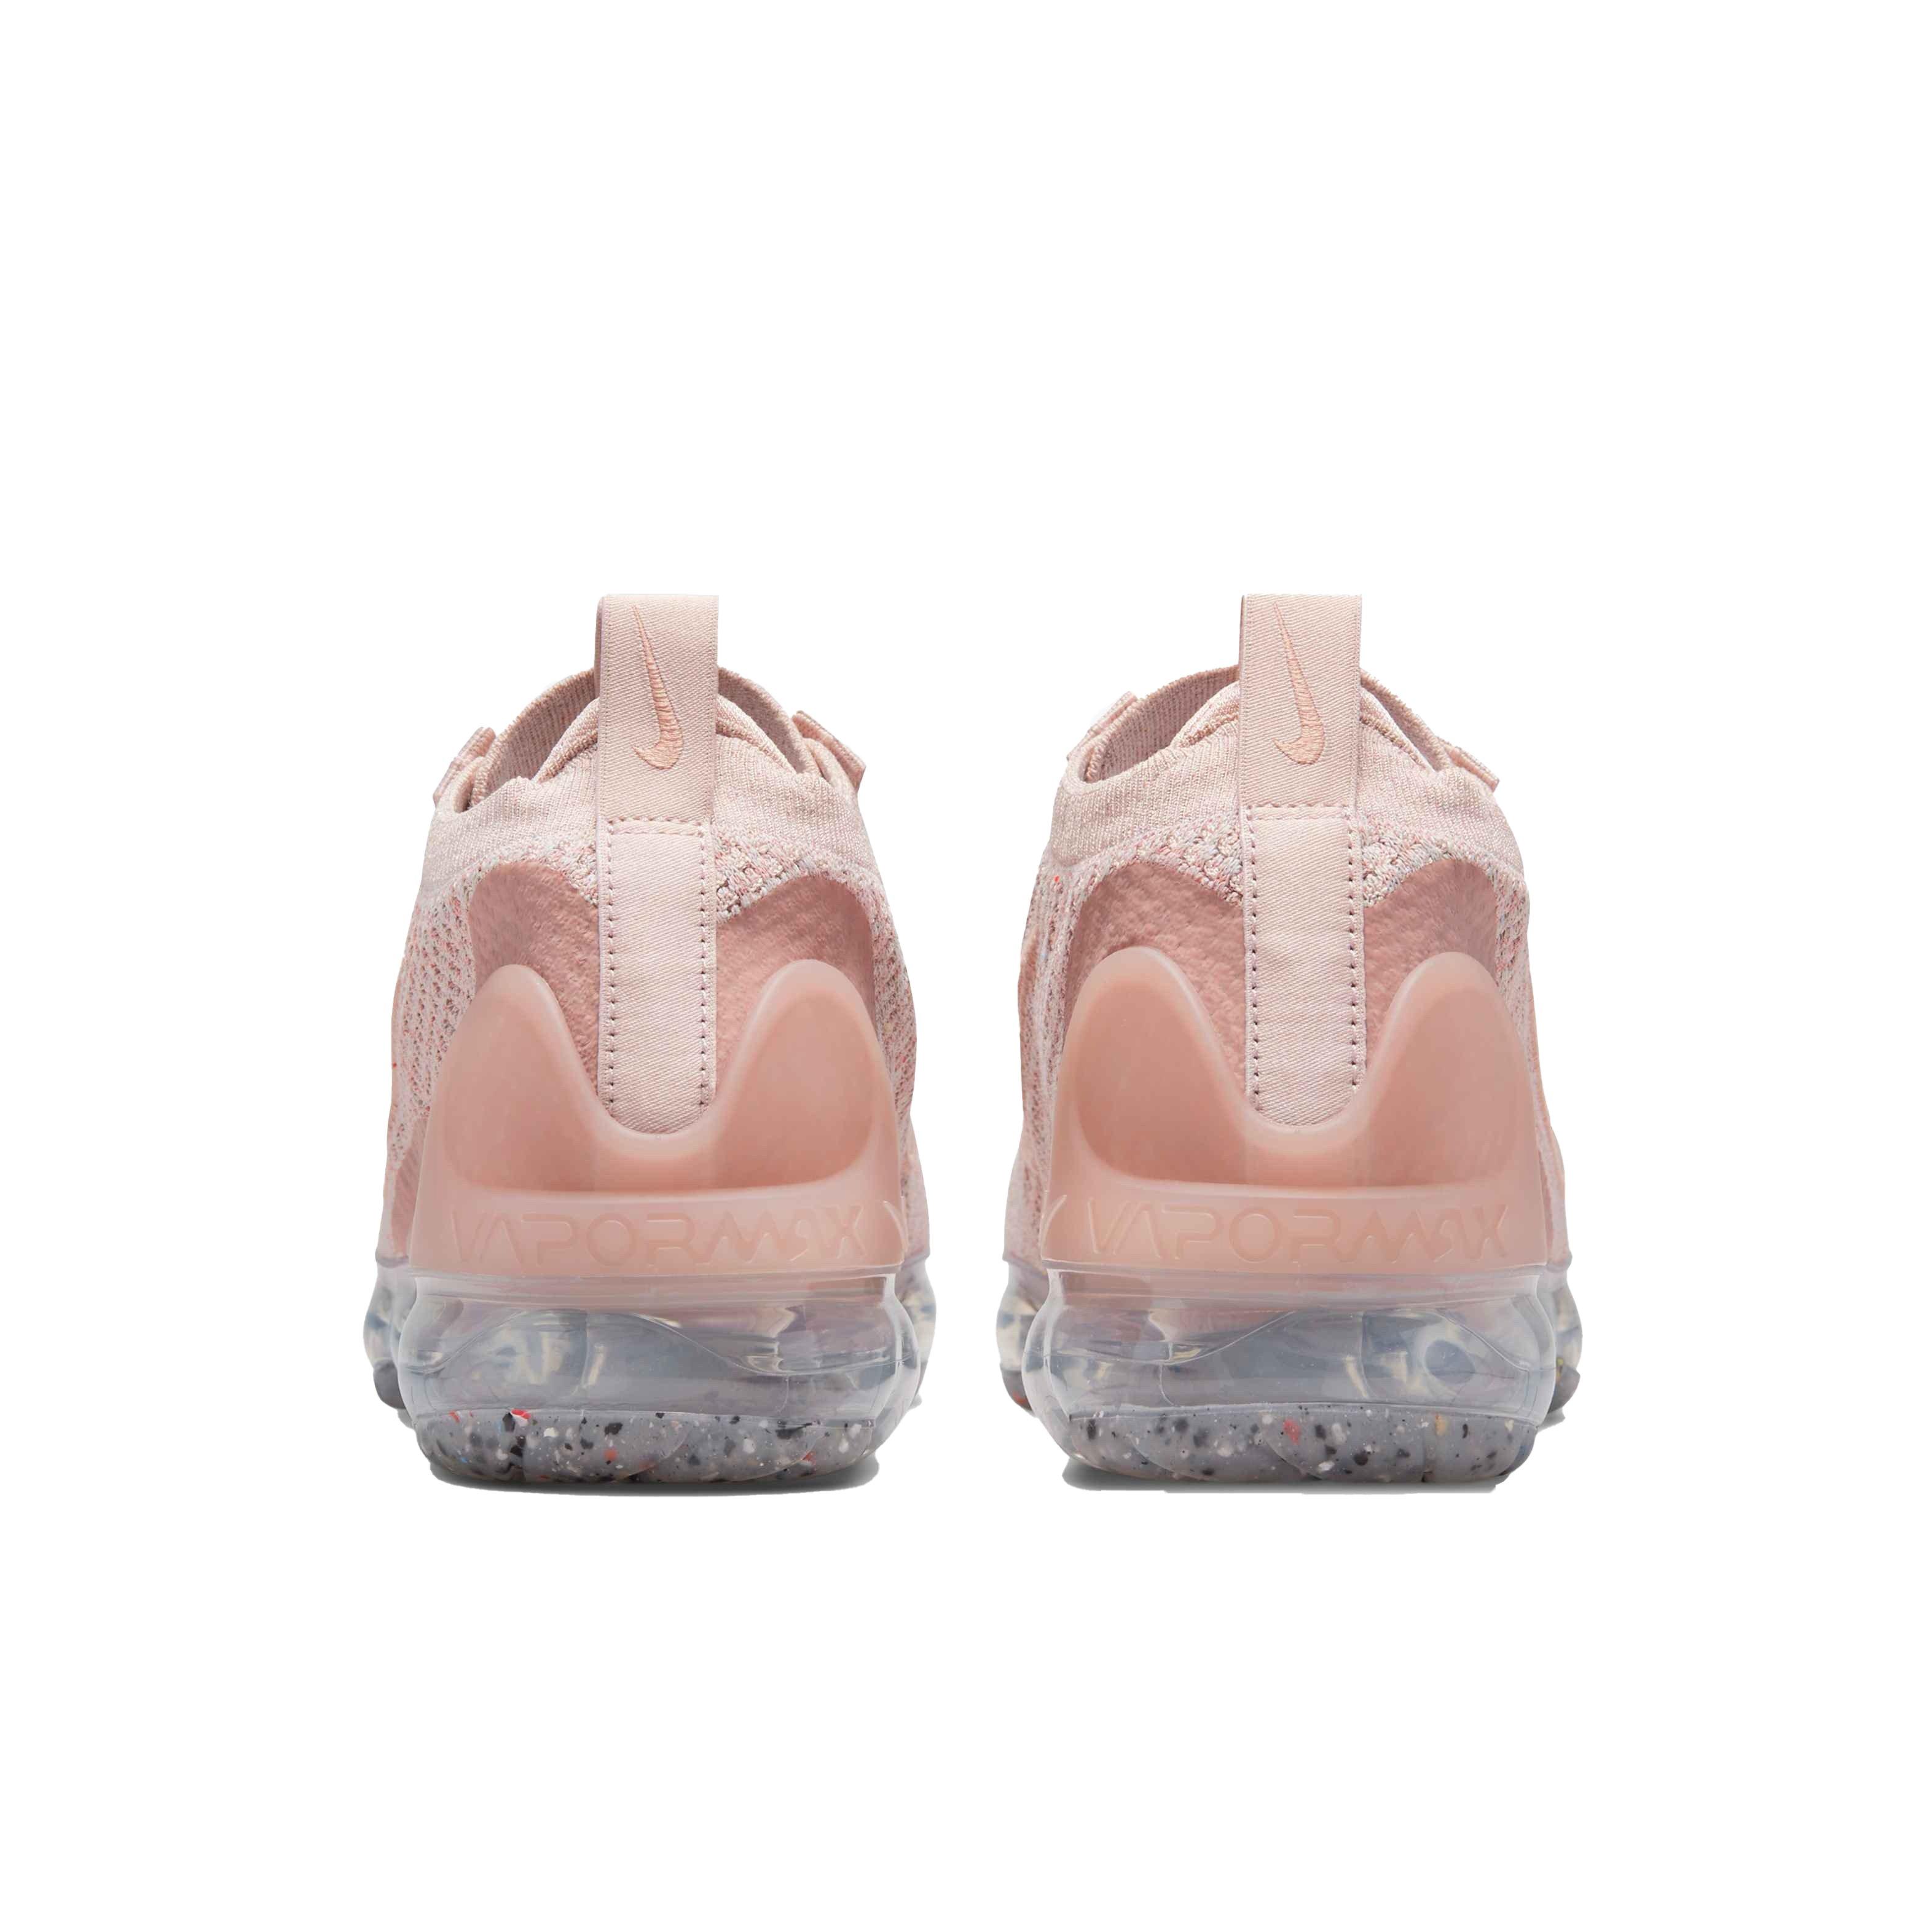 Nike VaporMax 2021 Flyknit "Pink Oxford/Pink Oxford/Rose Whisper" Women's Shoe